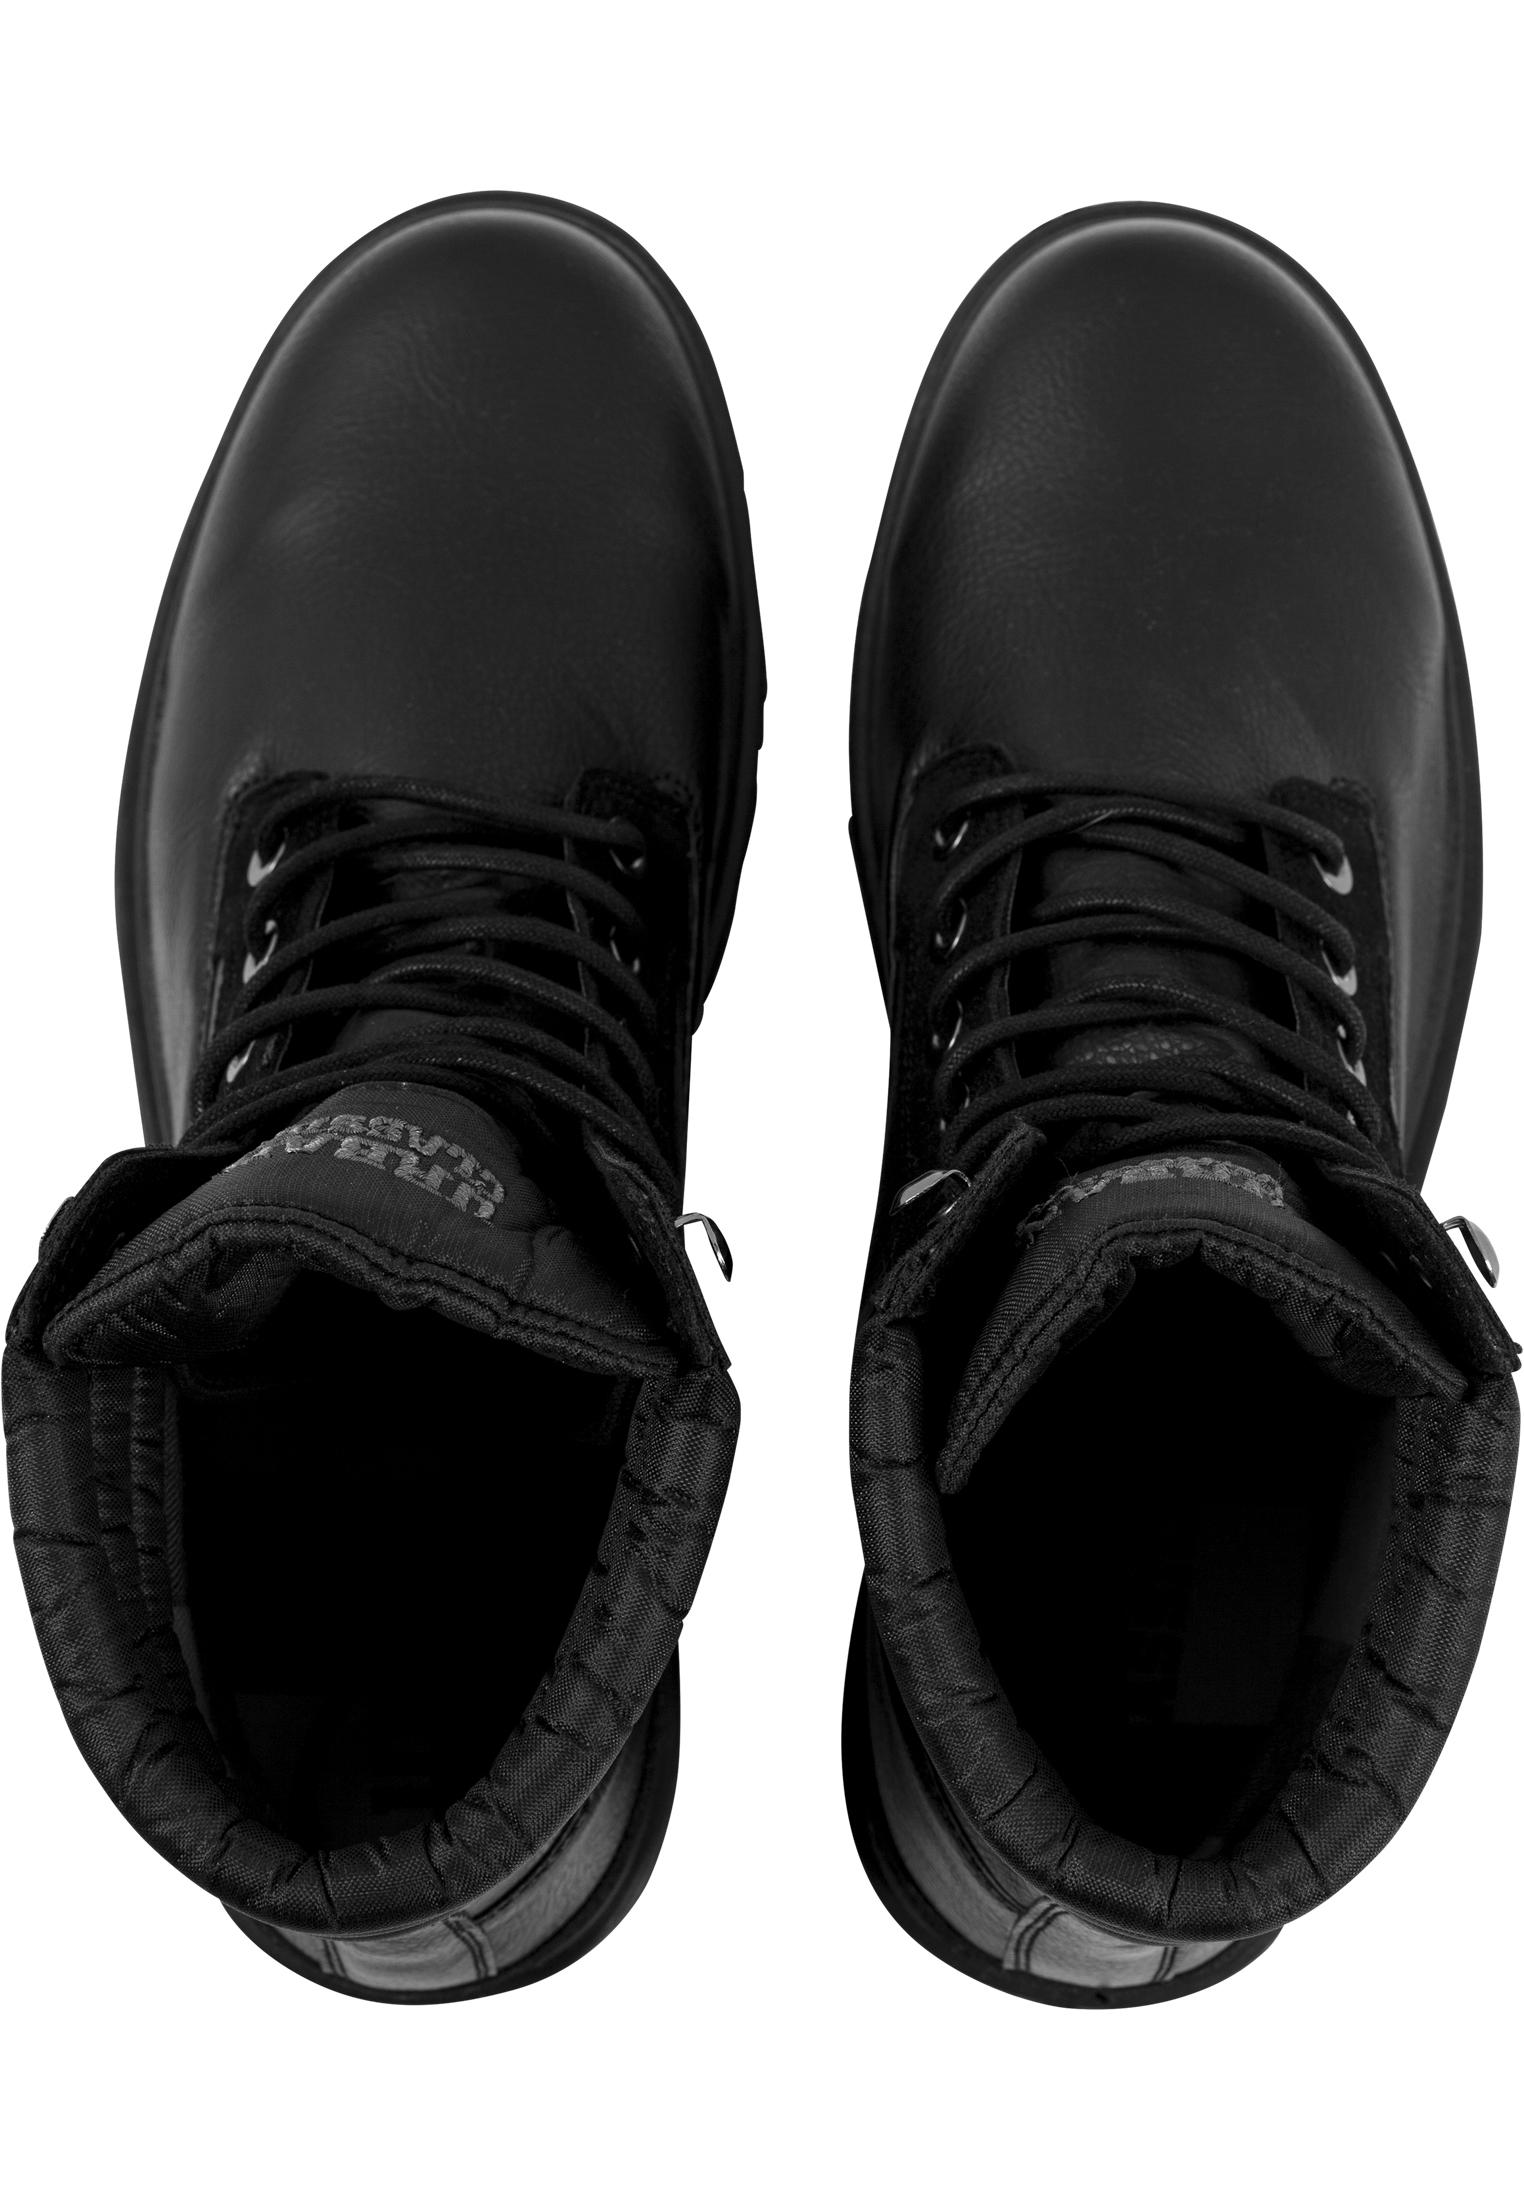 Schuhe Winter Boots in Farbe blk/blk